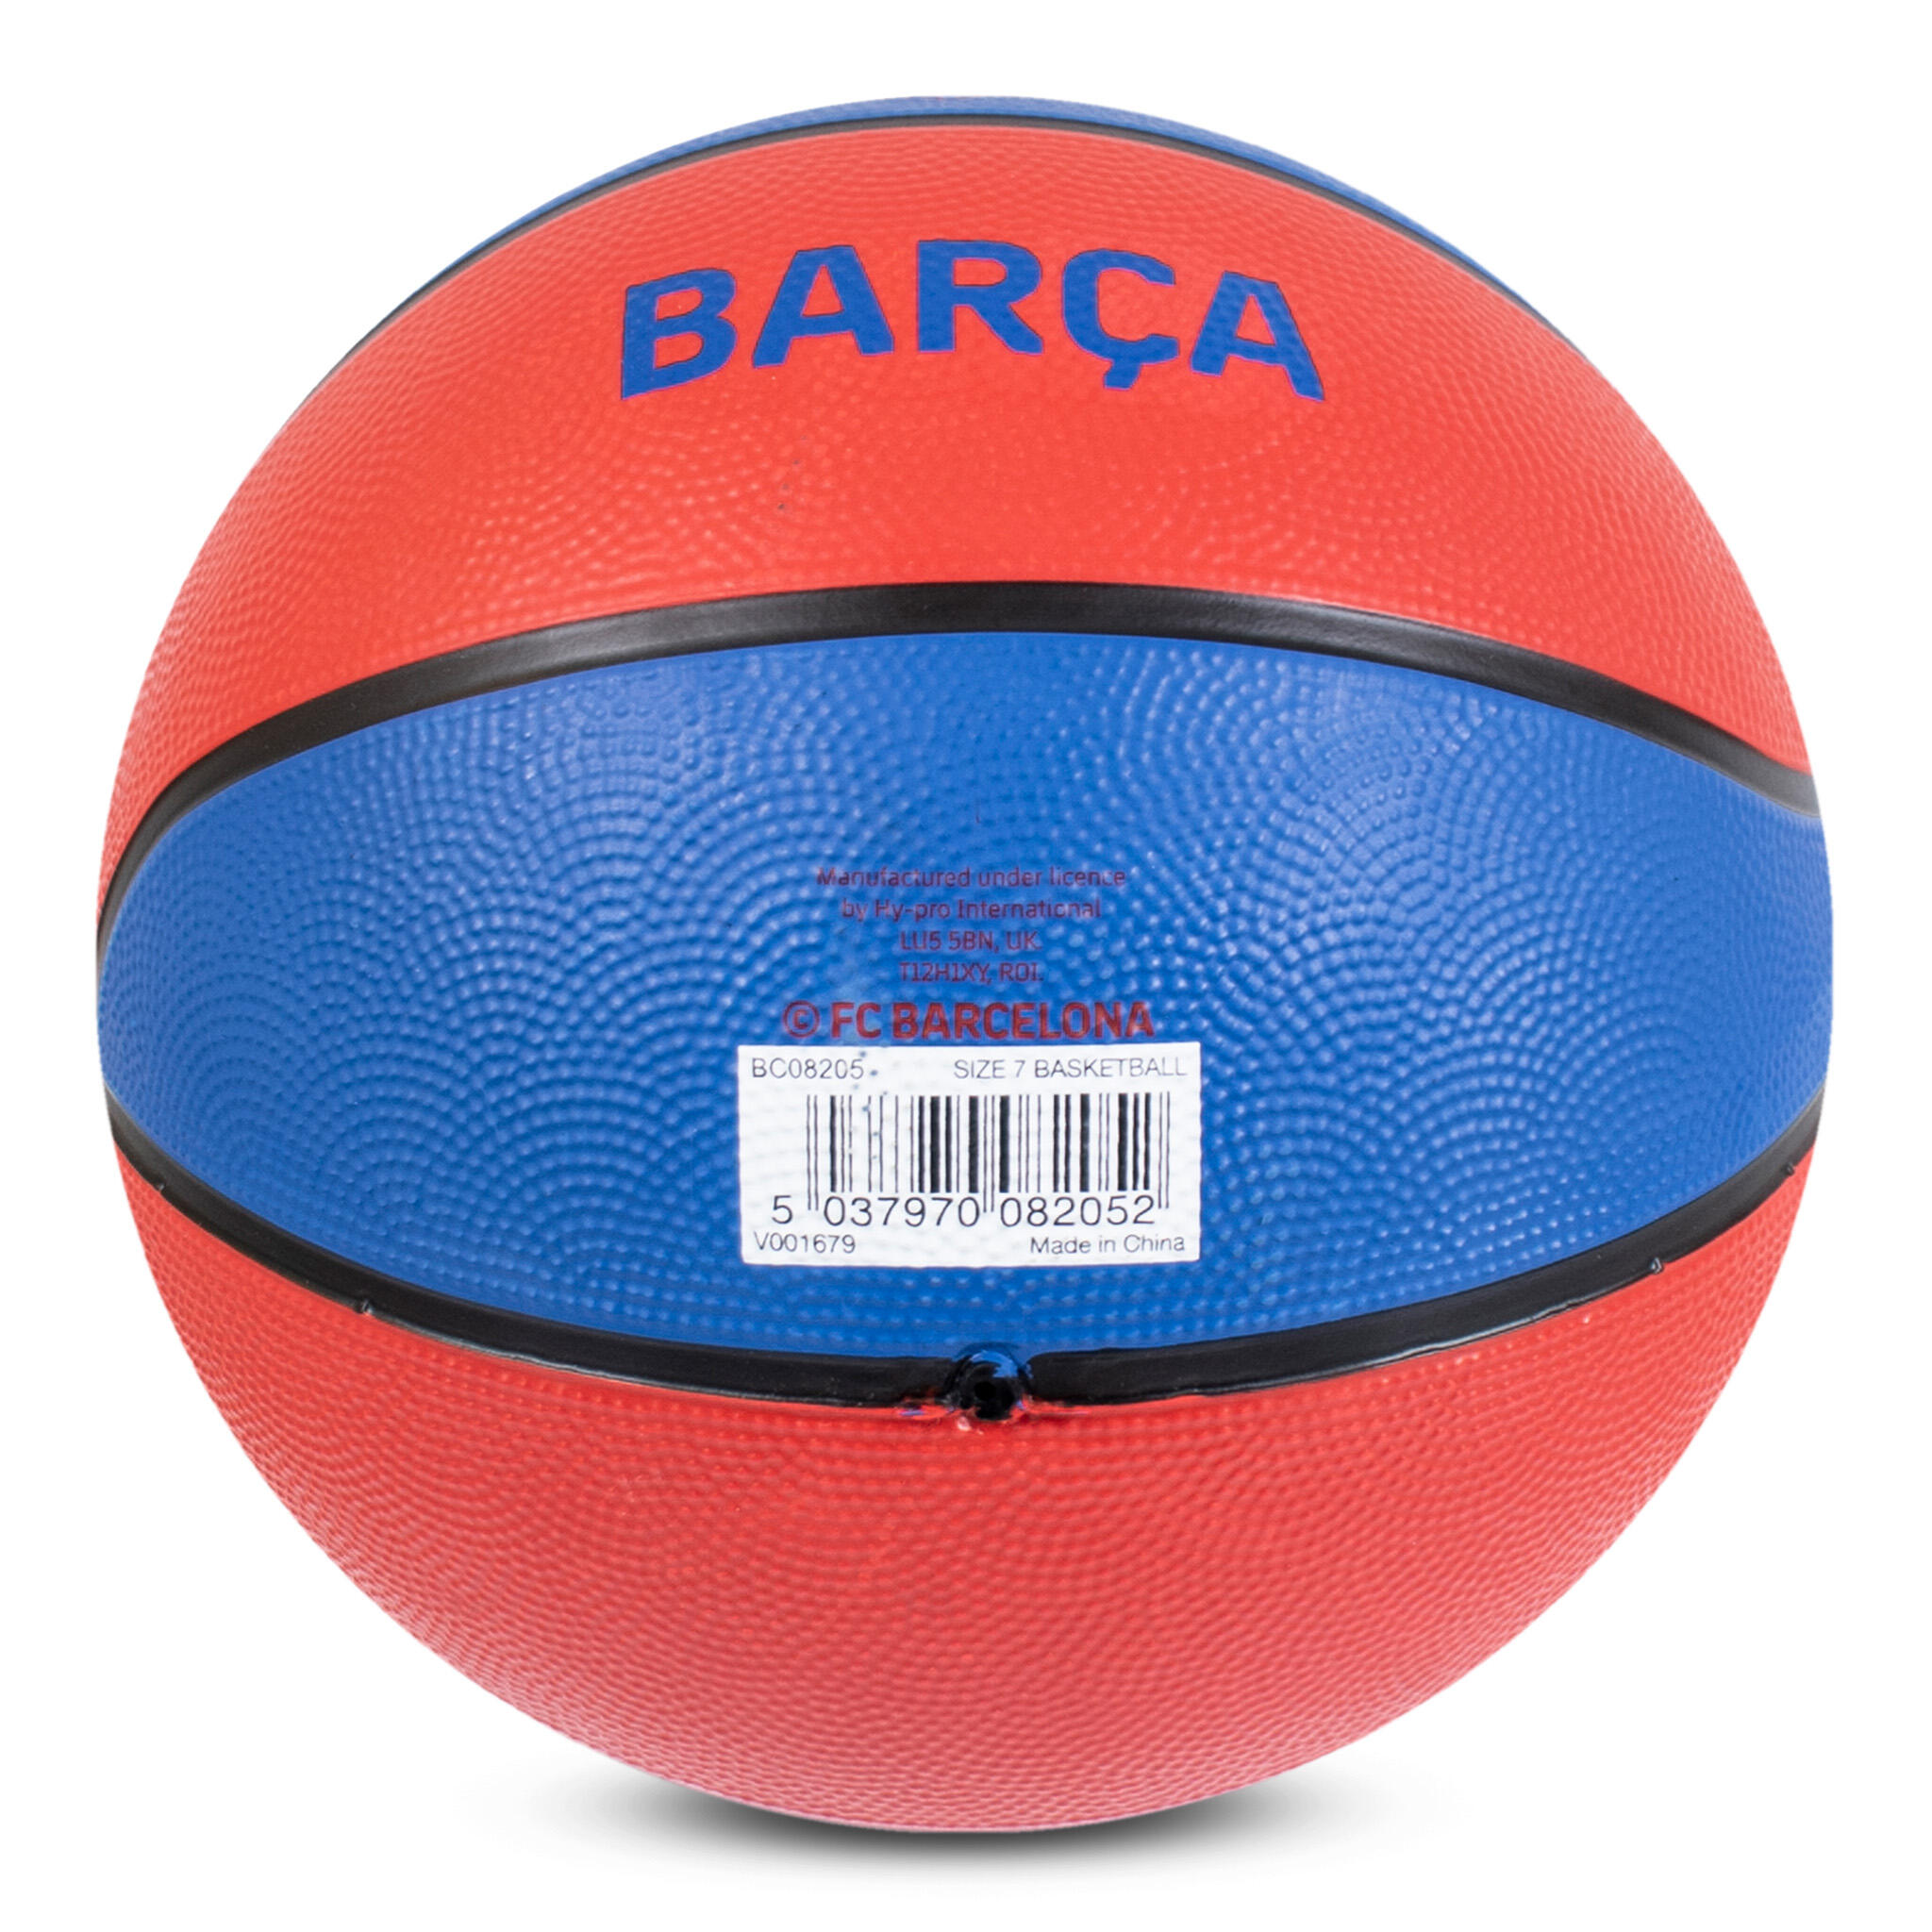 Barcelona Size 7 Basketball 5/5